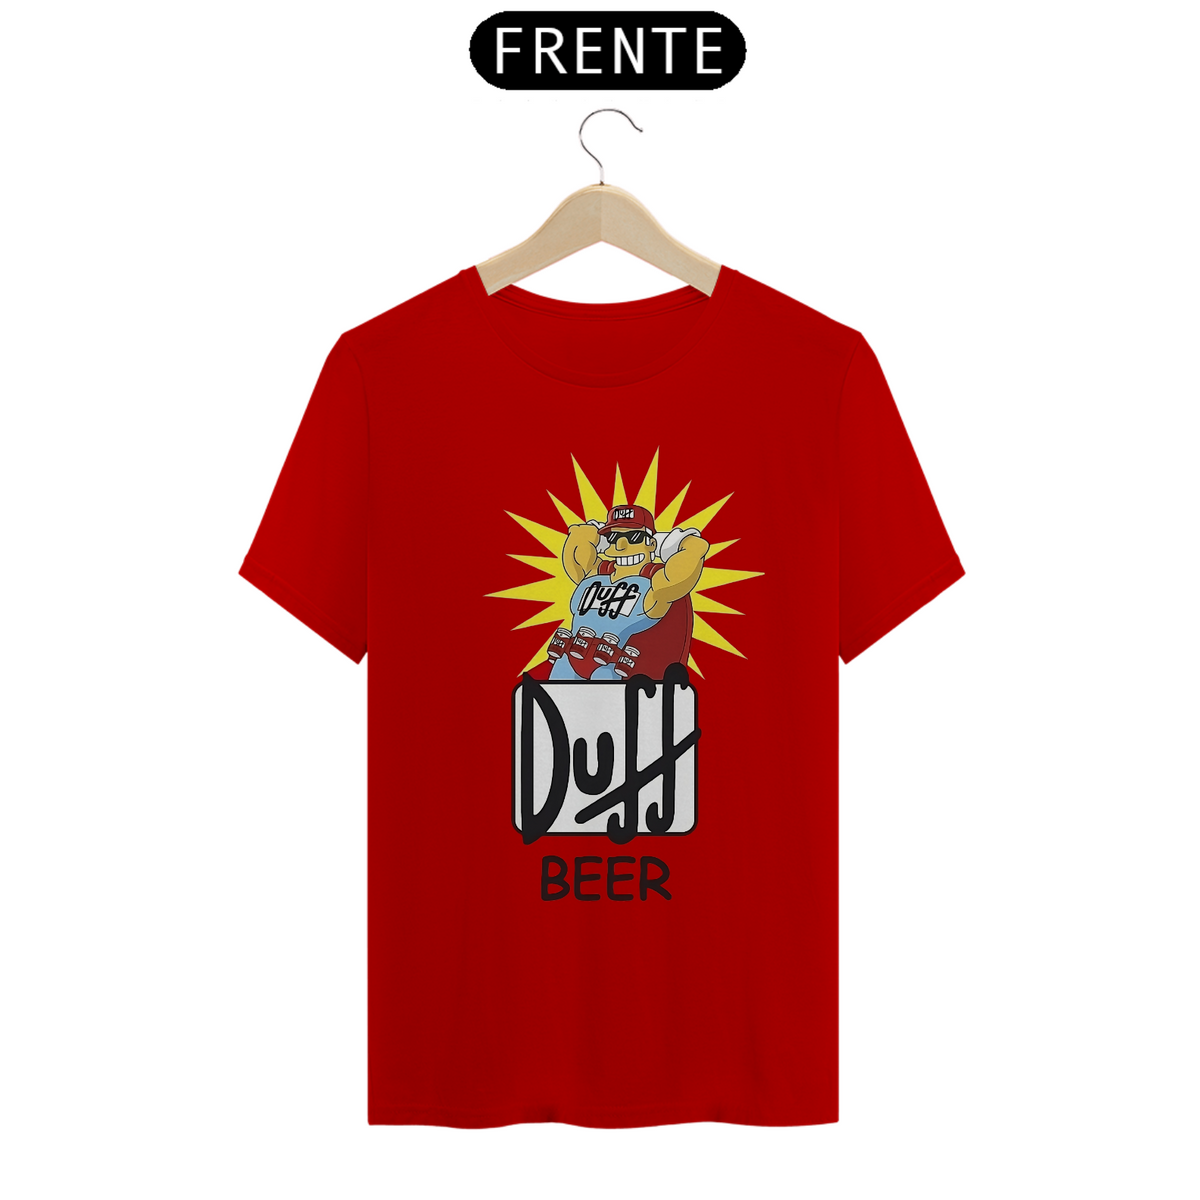 Nome do produto: Duff Beer